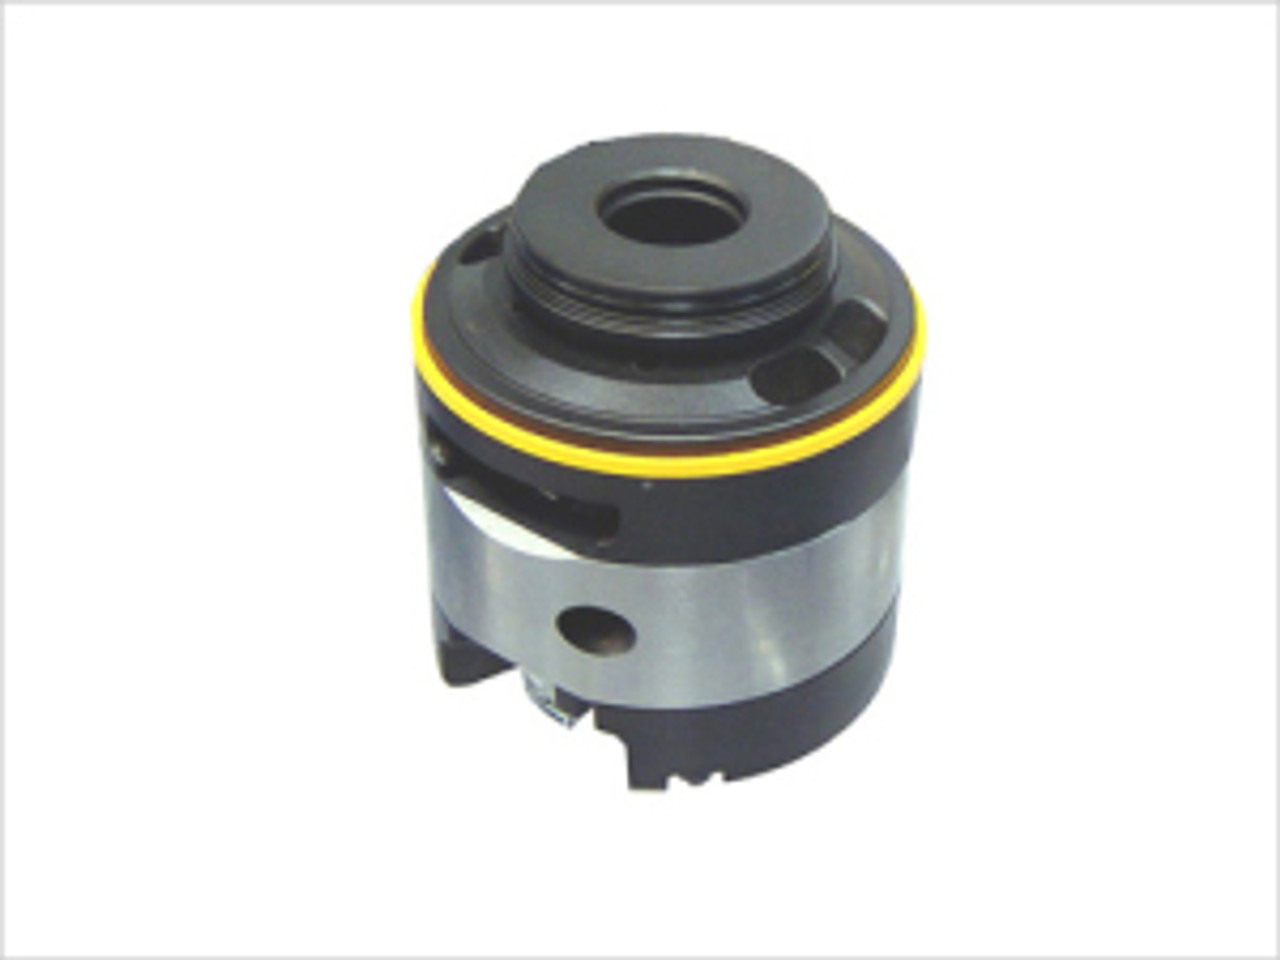 421571 Vickers hydraulic vane pump replacement cartridge kit 25VQ 14 GPM